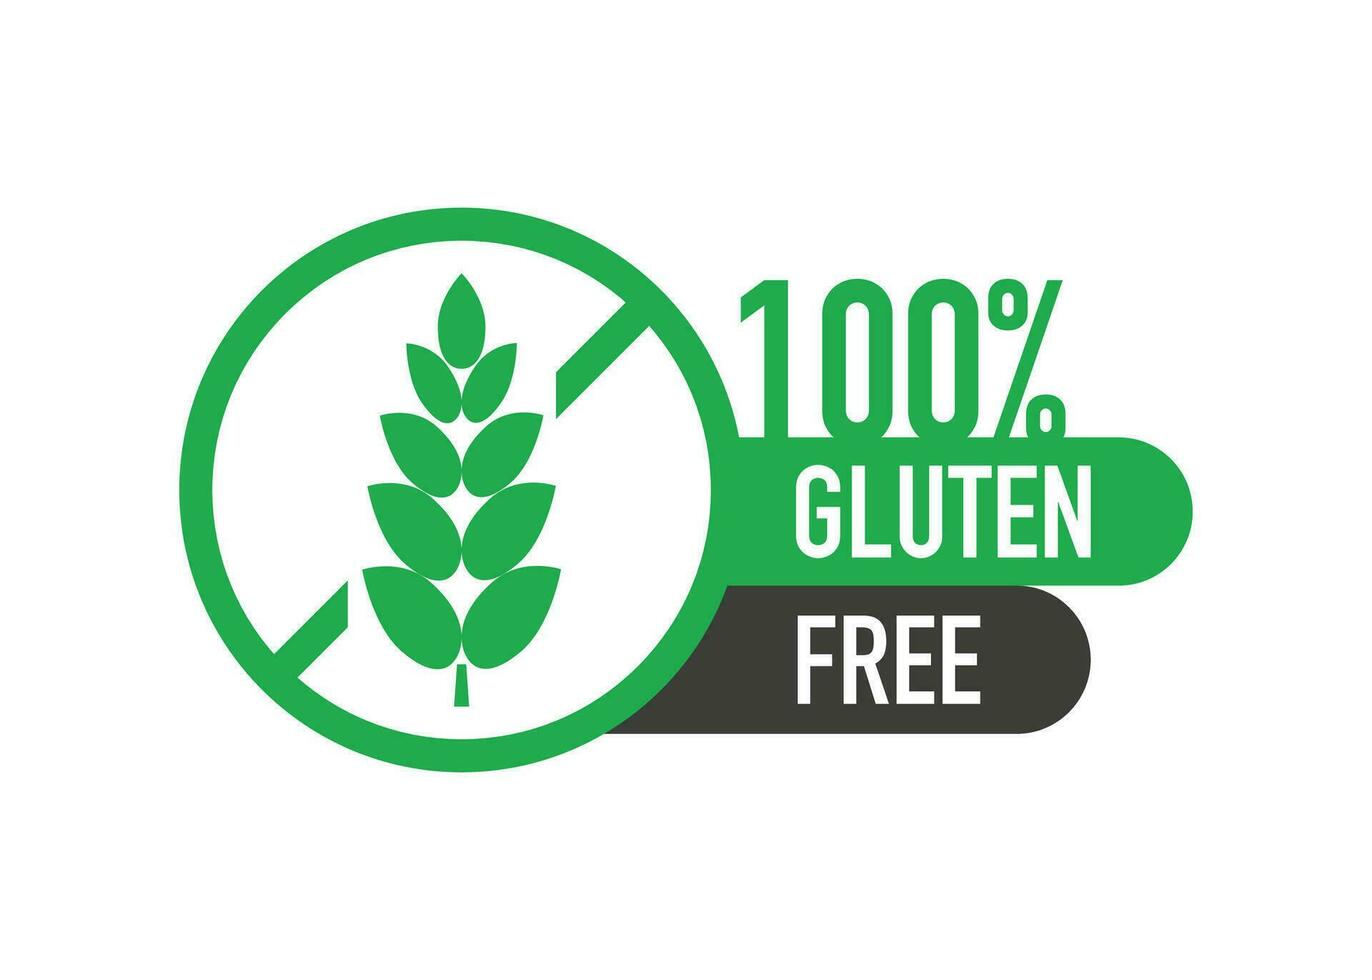 Flat icon with lactose gluten gmo sugar free. Organic signs. Vector illustration.